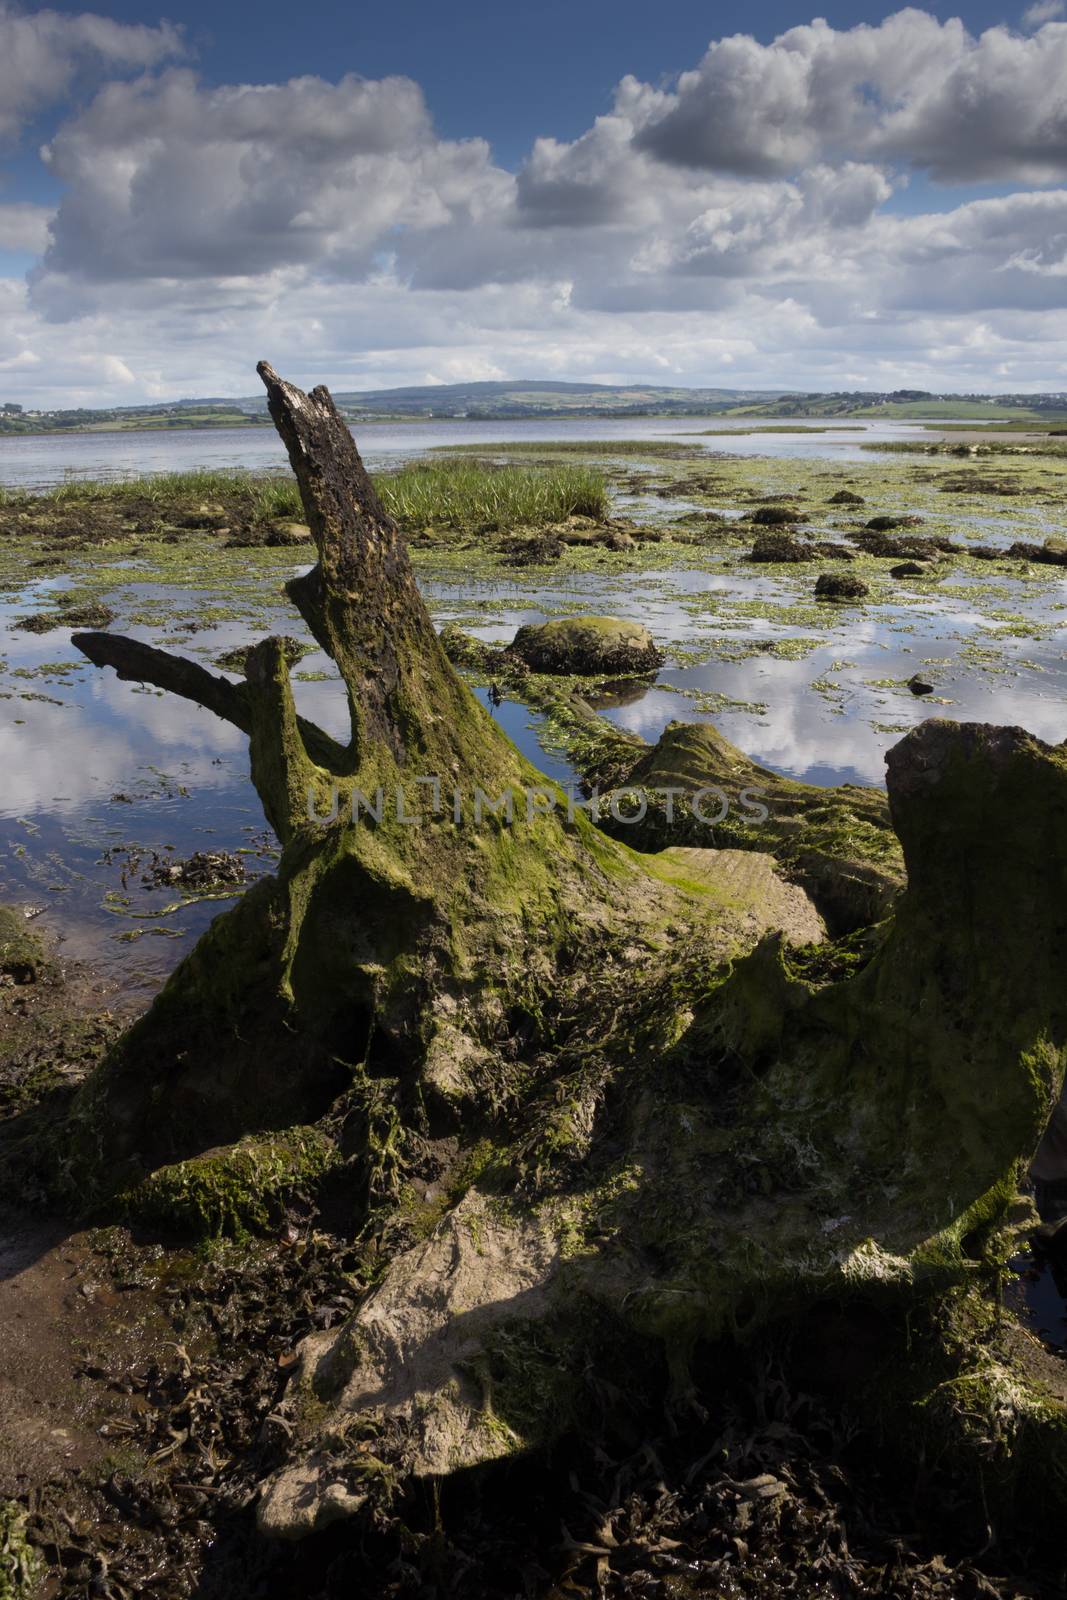 Wetland in Ireland by magicbones